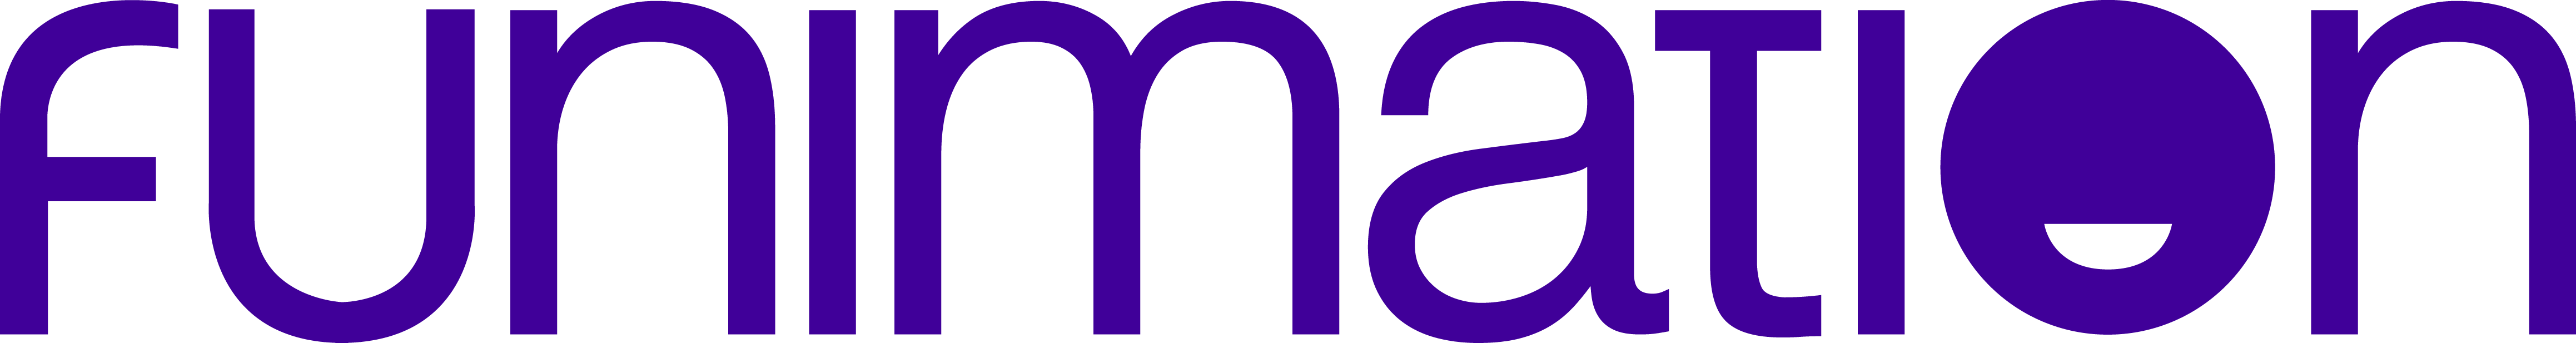 Funimation 2016 Logotype Purple